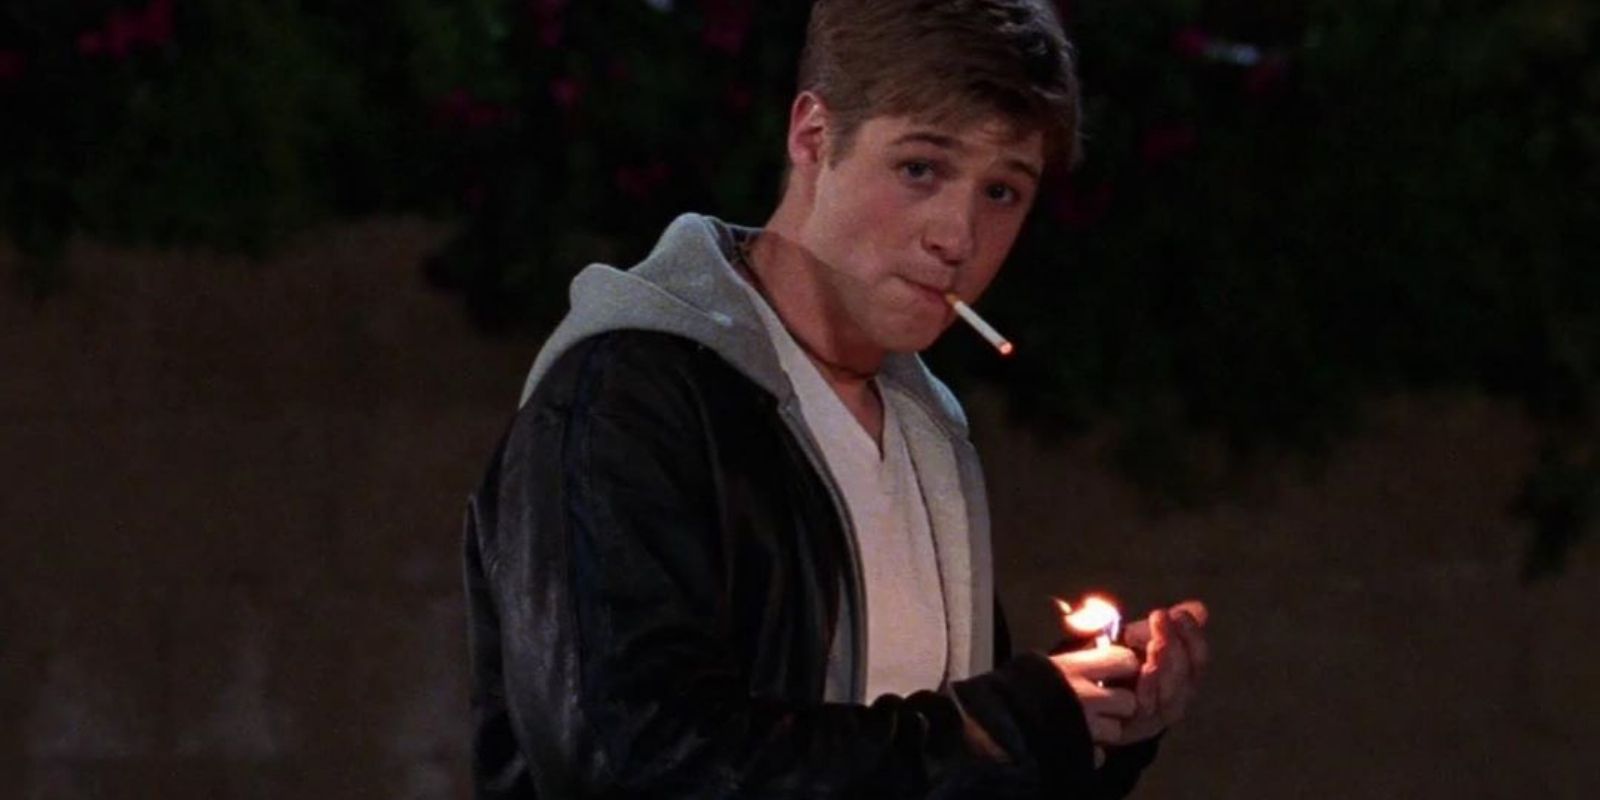 Ben McKenzie as Ryan smoking outside at night in The O.C.